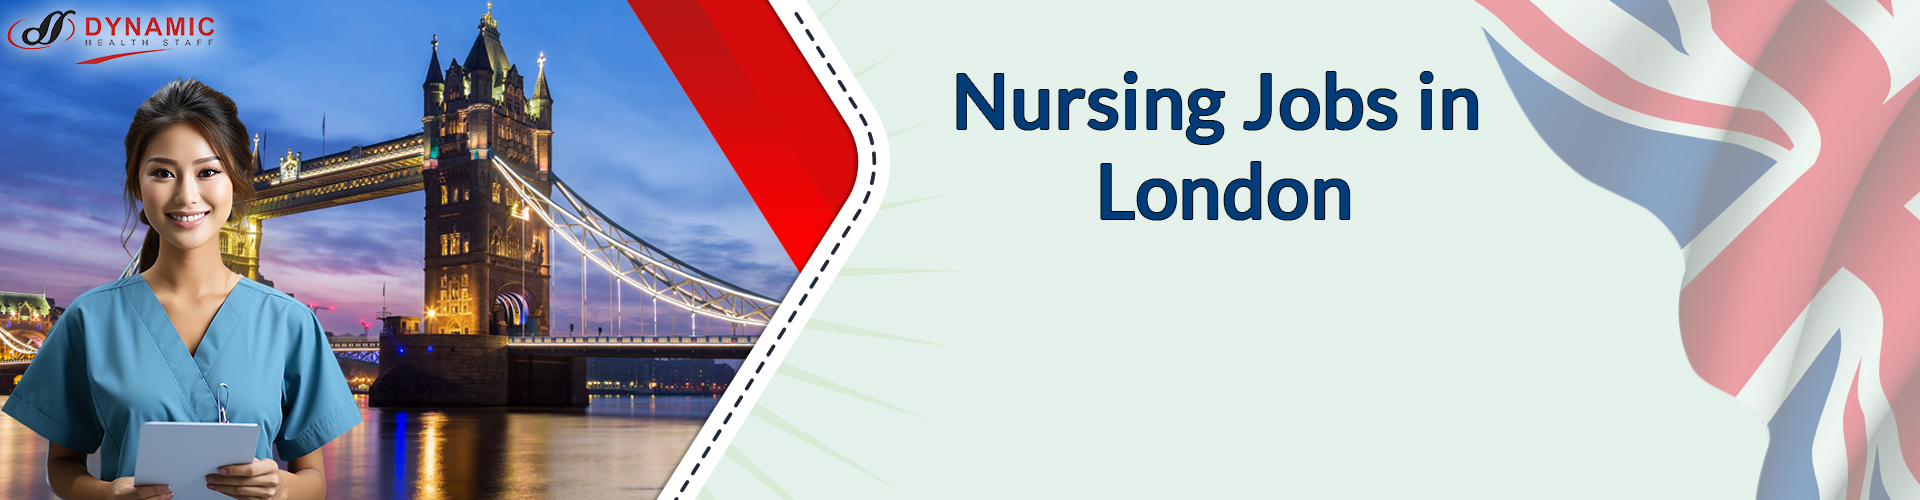 Nursing Jobs in London